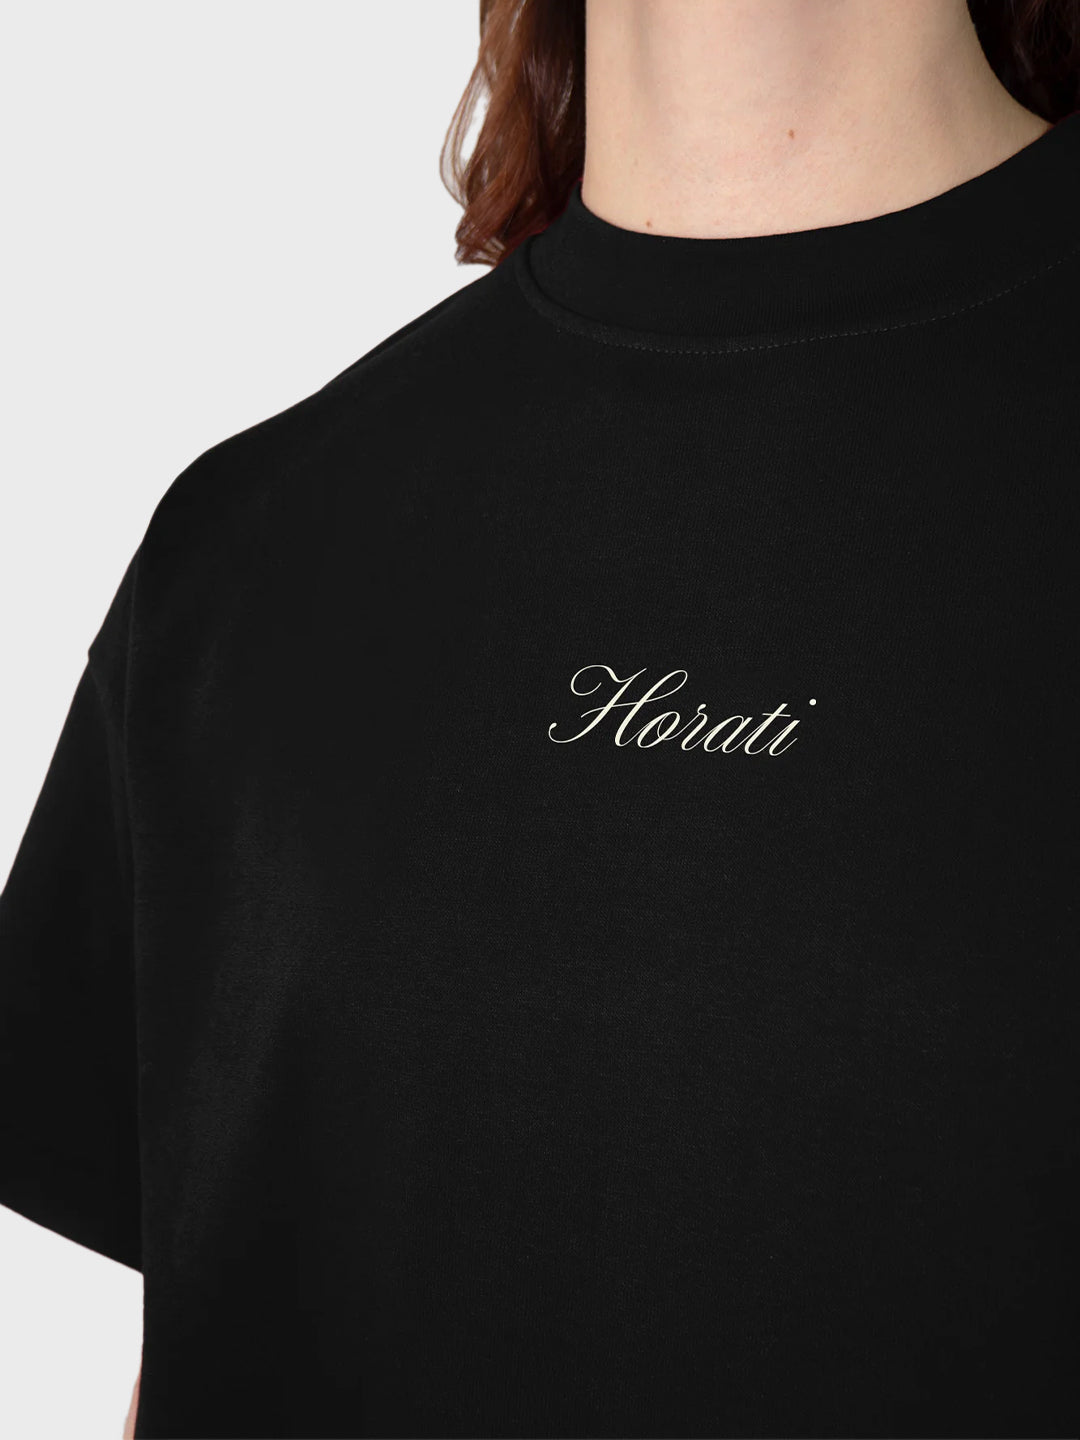 horati oversized t-shirt zwart